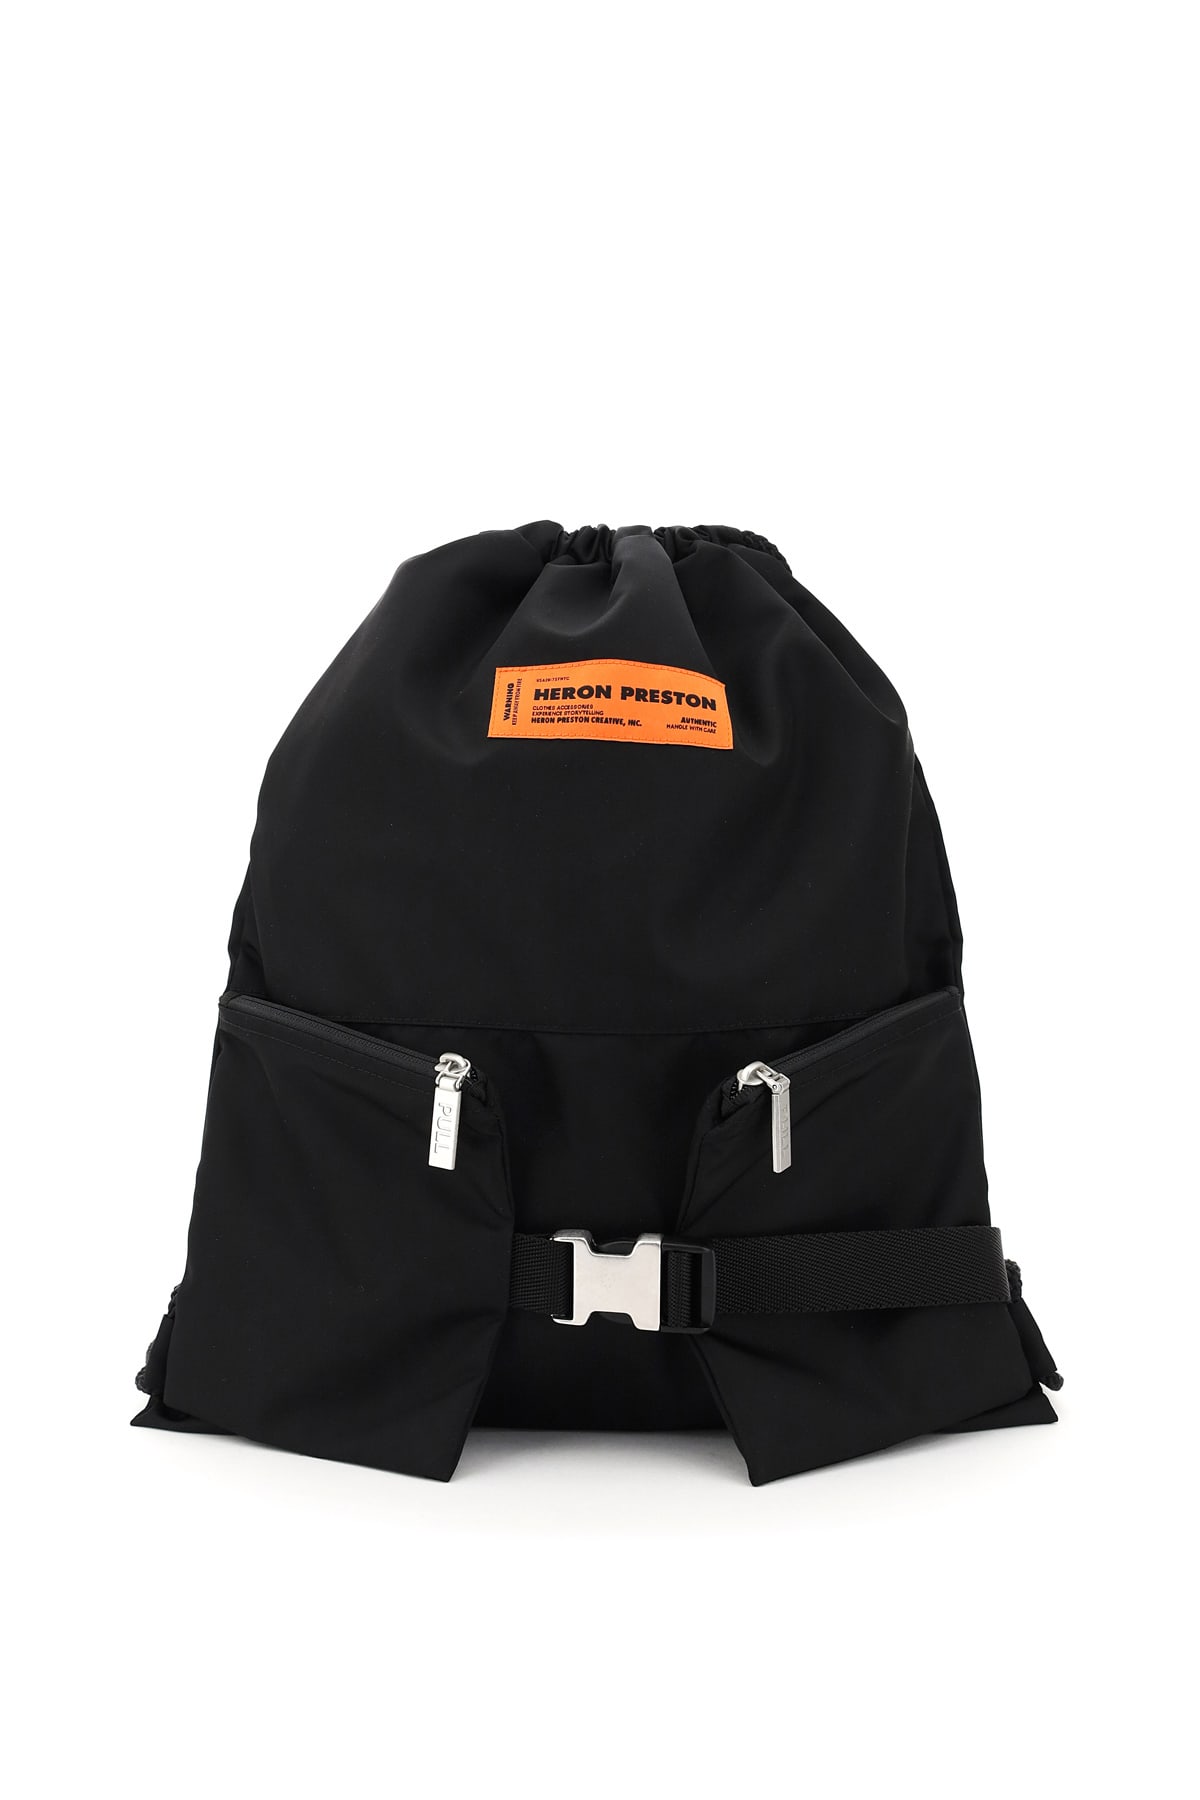 HERON PRESTON Gym Bag Nylon Backpack Sack